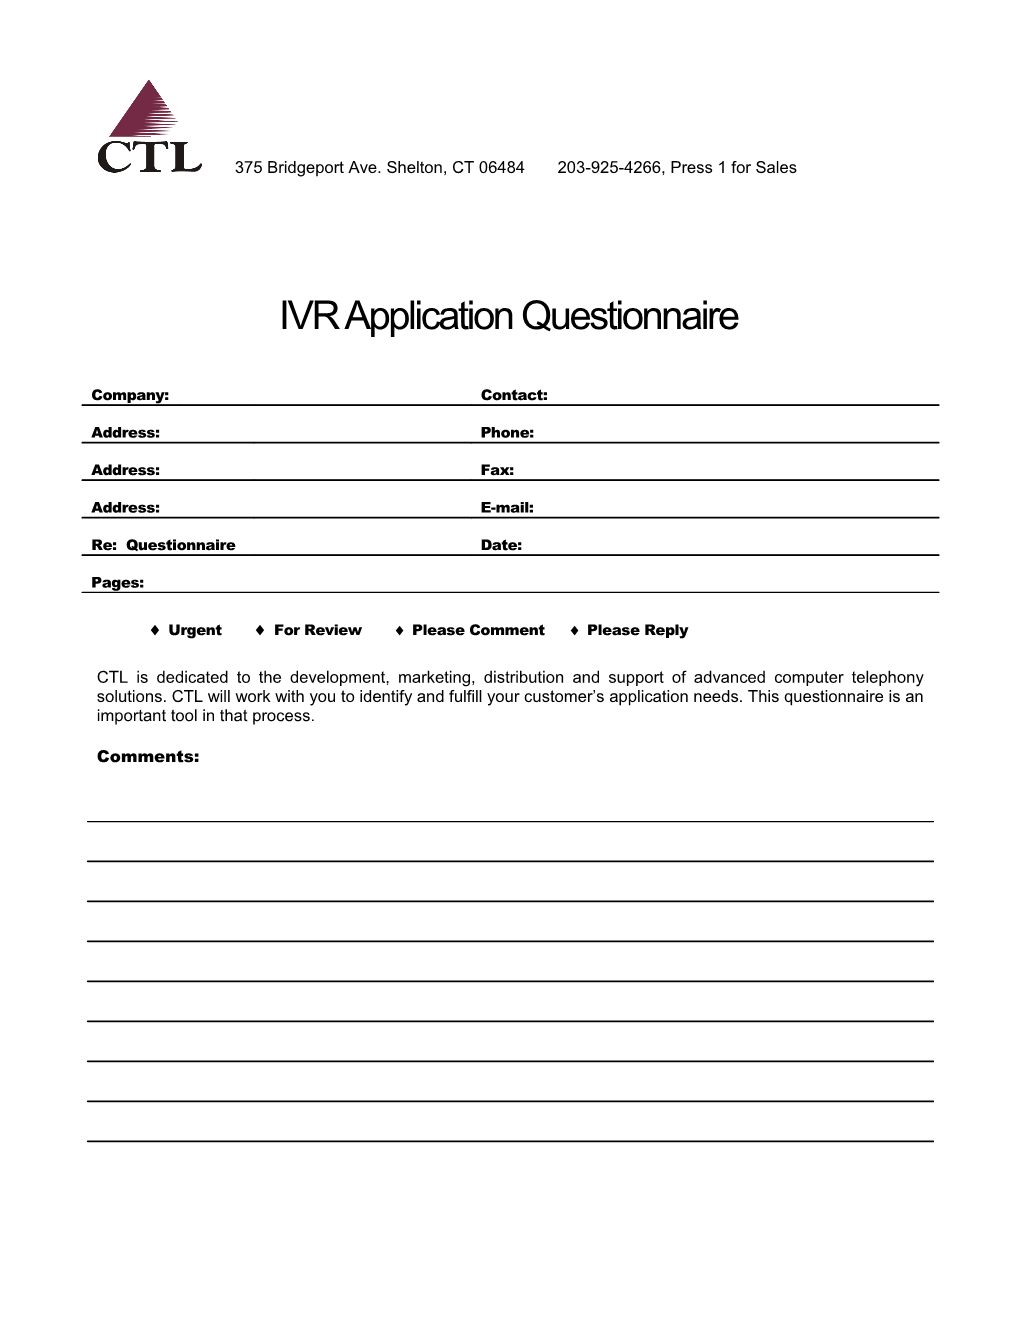 CTL Dealer Application Questionnaire